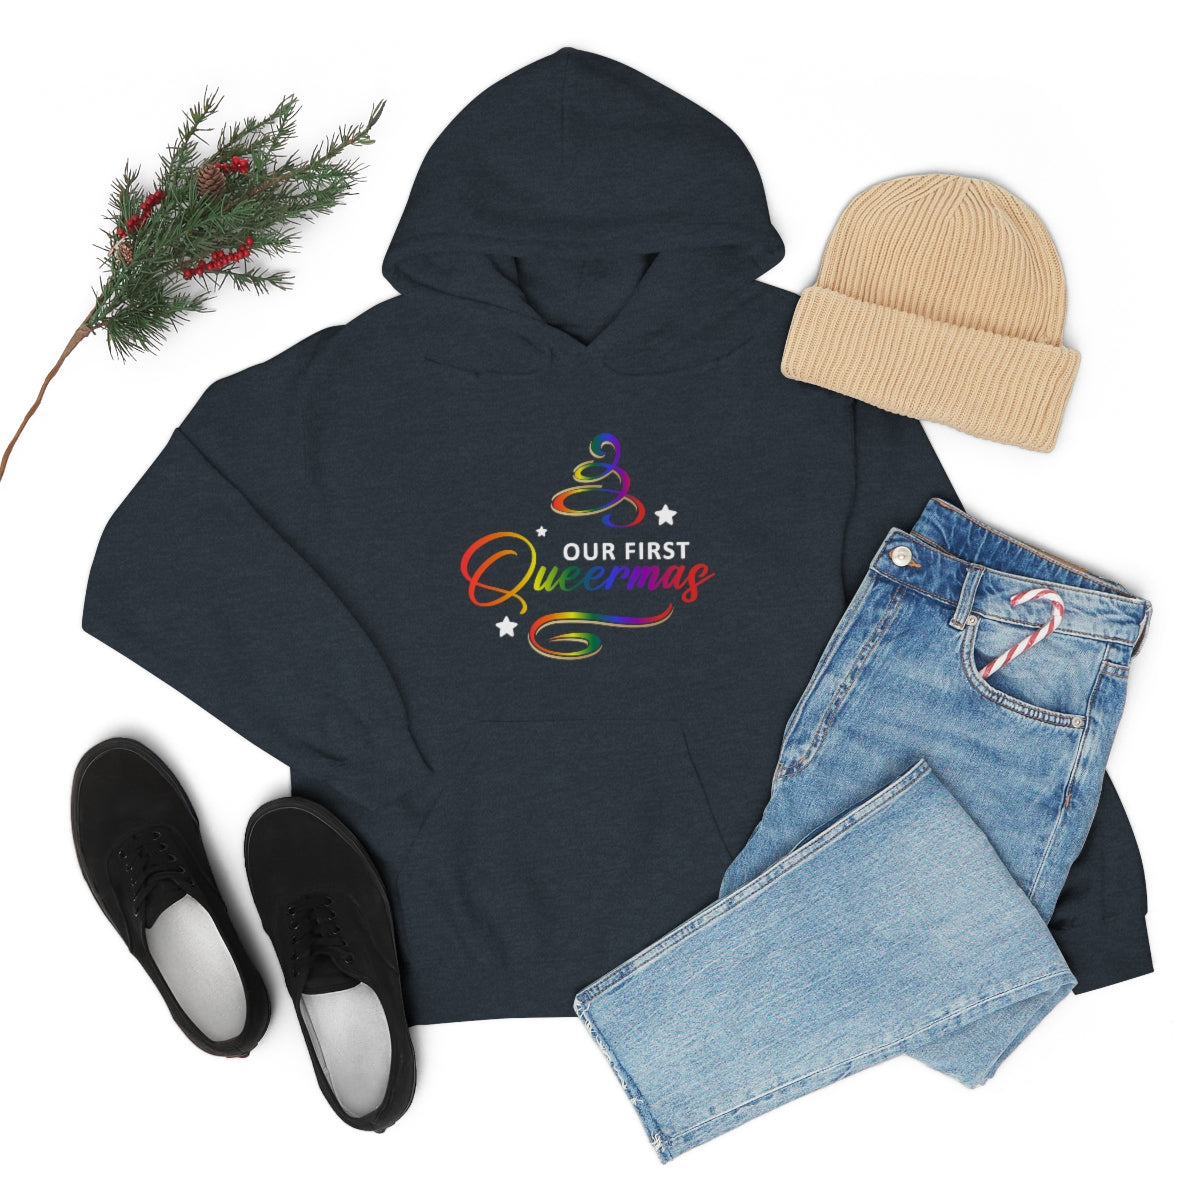 Unisex Christmas LGBTQ Heavy Blend Hoodie - Our First Queermas Printify